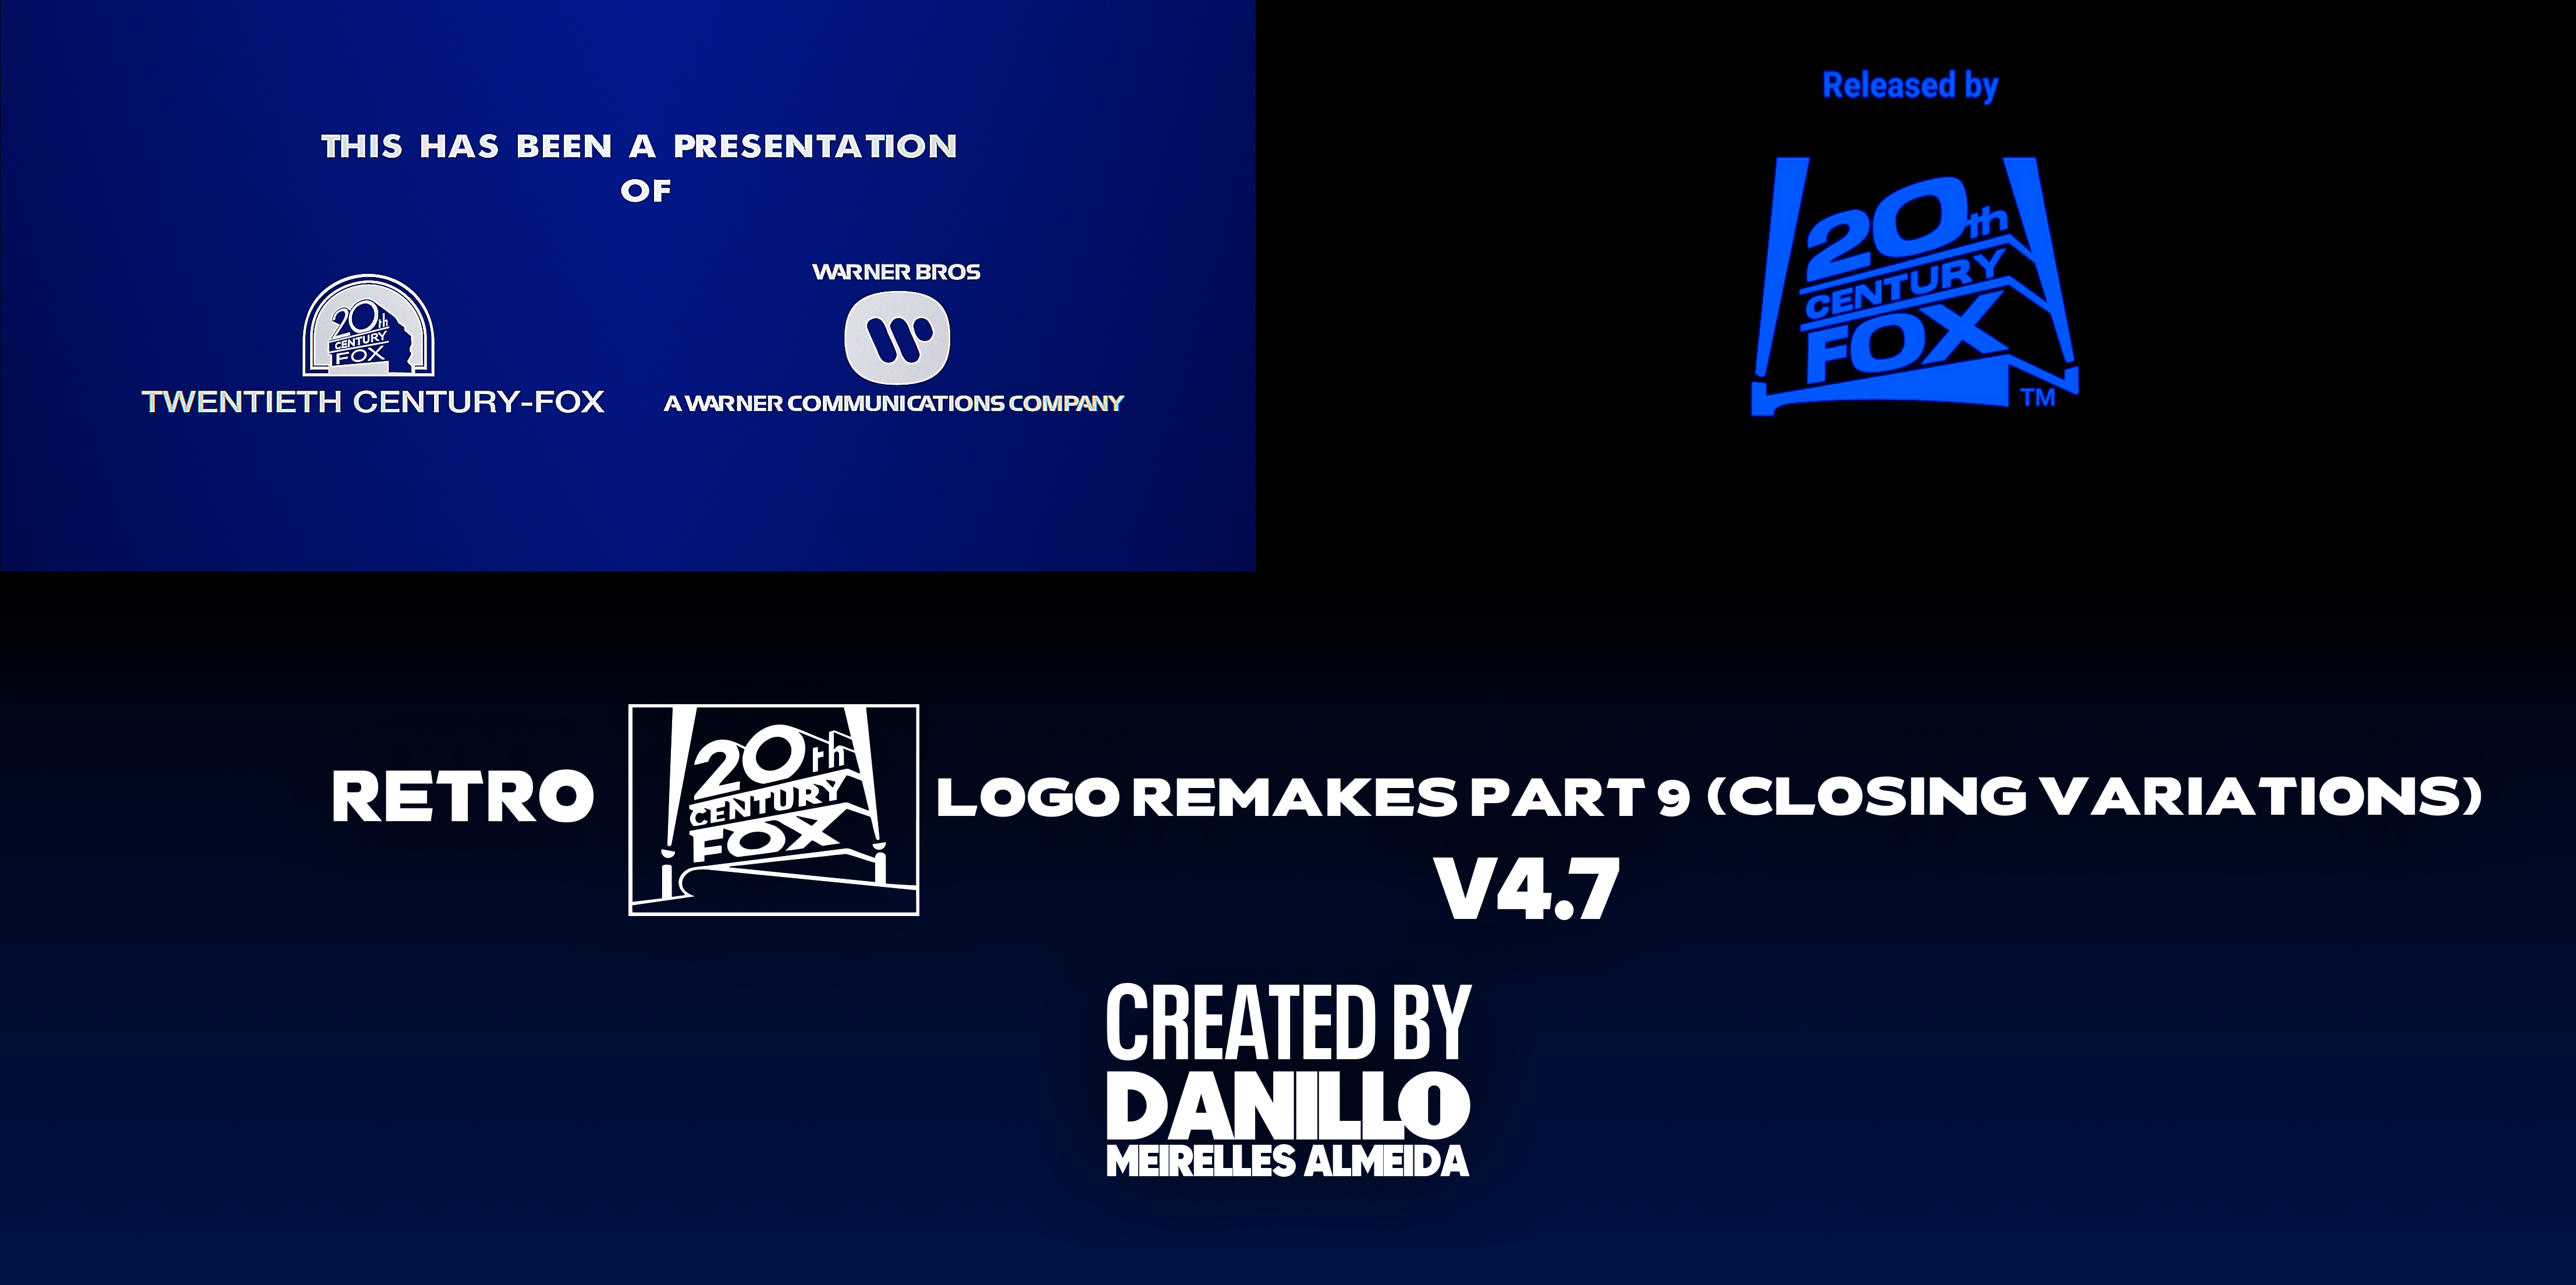 Retro Fox Logo Remakes V2 by jacobcaceres on DeviantArt